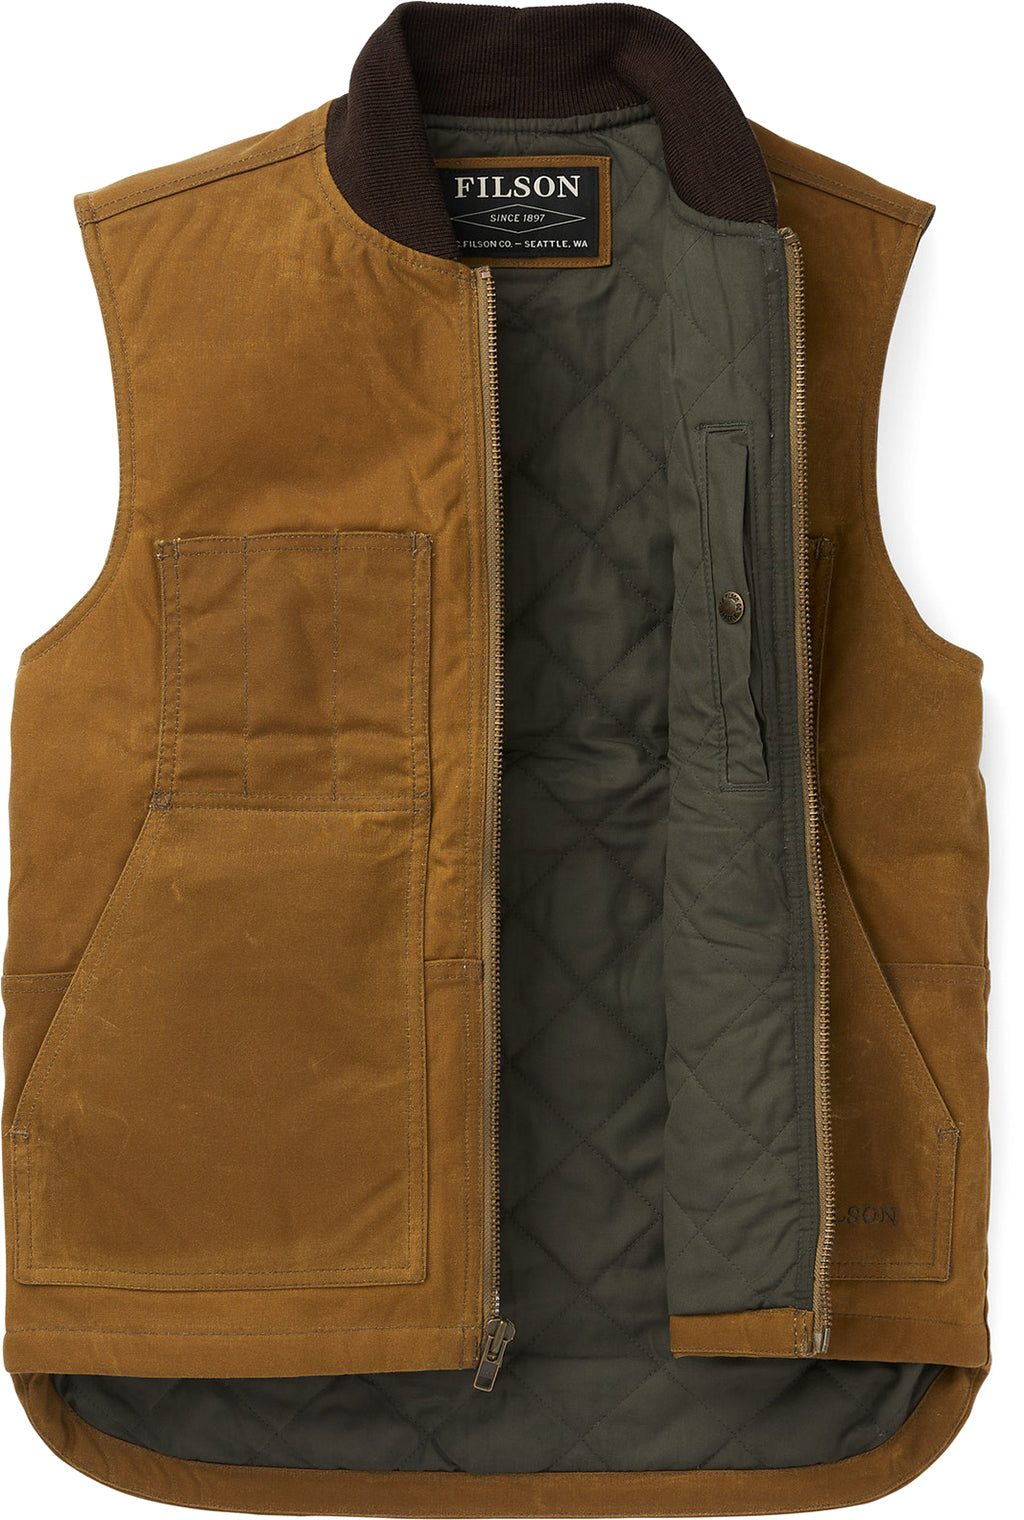 Filson - Tin Cloth Insulated Work Vest - Dark Tan - L